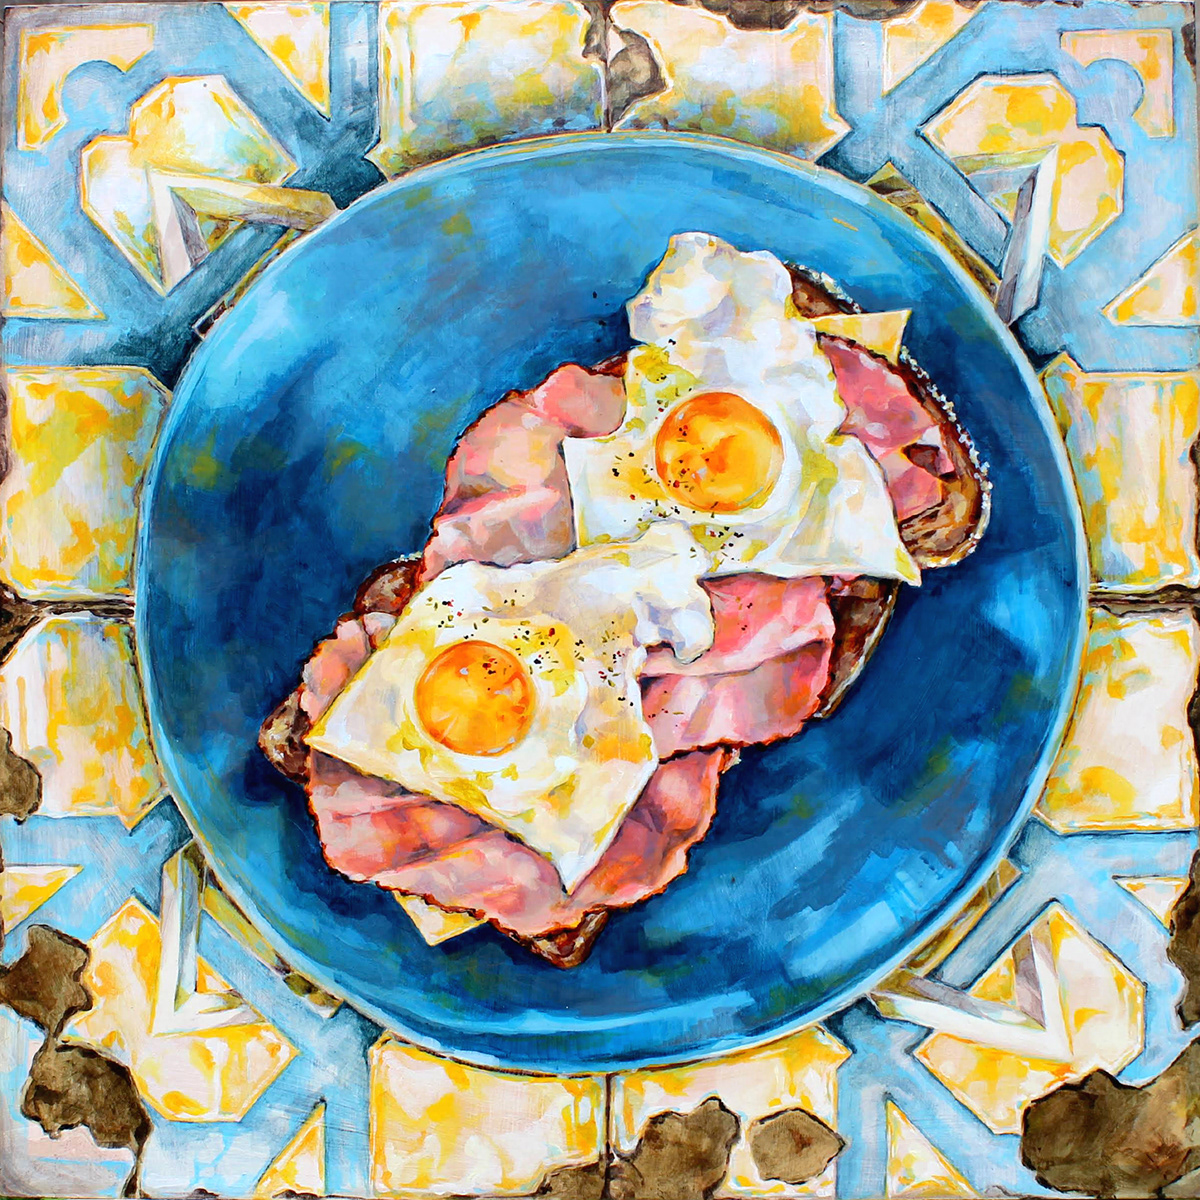 acrylic Adobe Portfolio bread breakfast dreillustrations eggs Finearts foodart foodgasm foodie foodillustration ILLUSTRATION  mosaic painterly painting   Portugal portuguese tiles